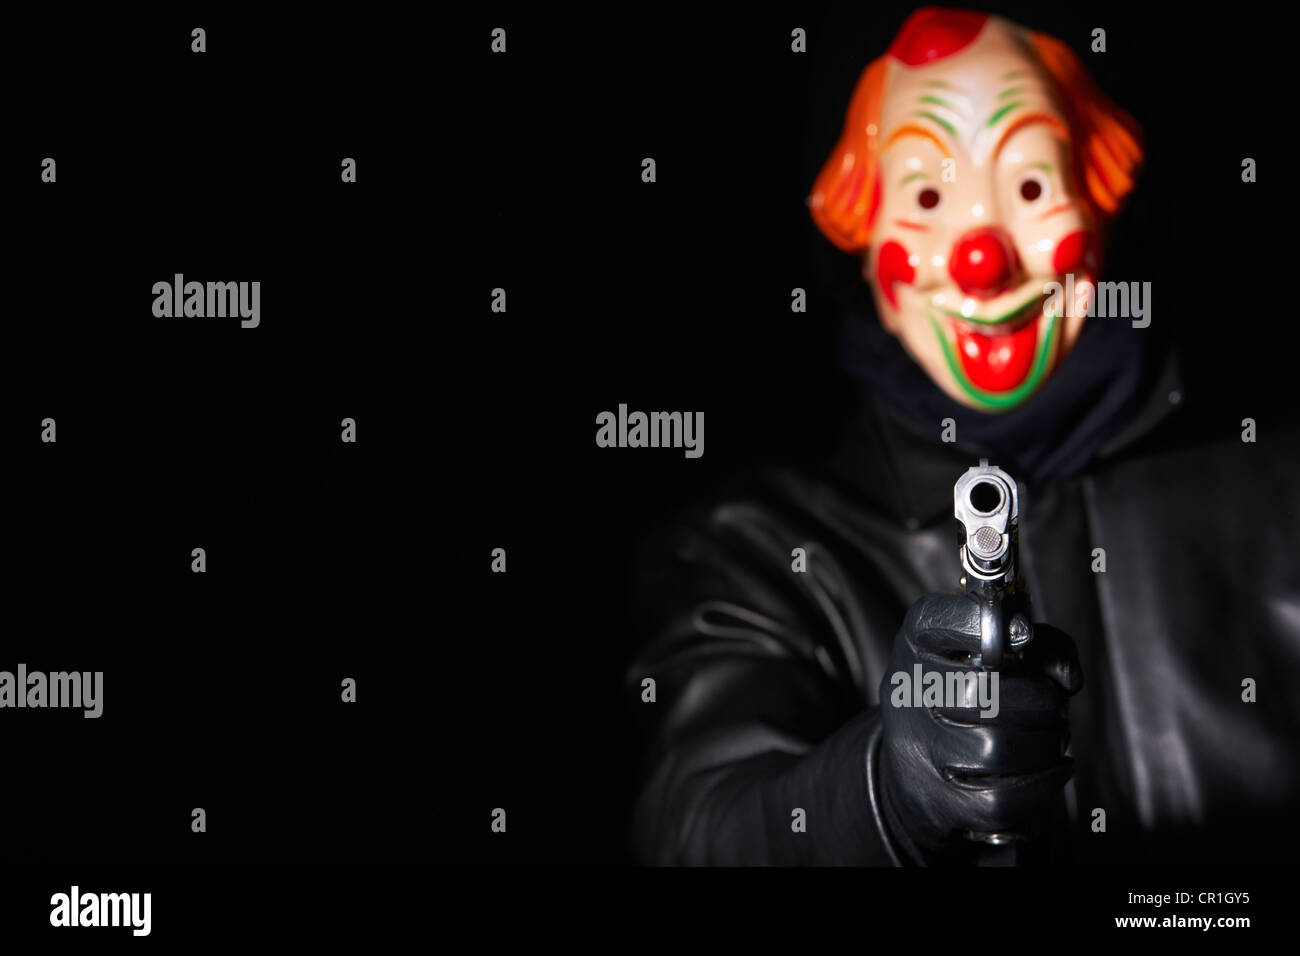 Man in clown mask pointing gun Stock Photo